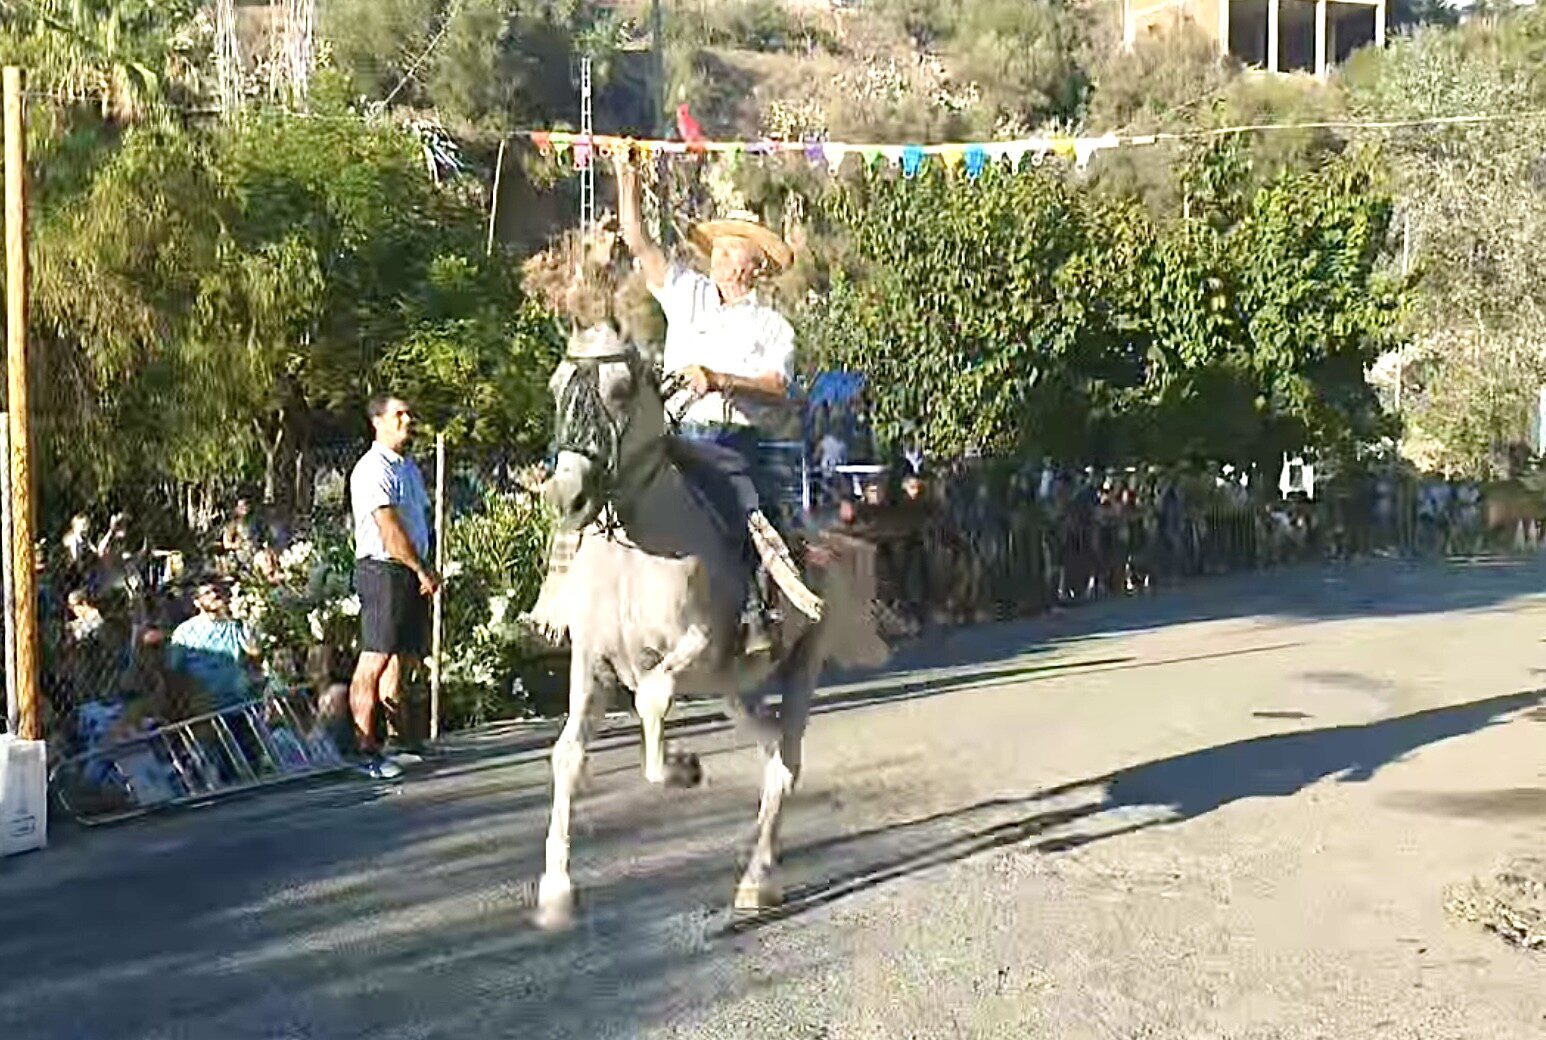 This image shows a horseman competing in the Corrida de Cintas at Competa Summer Feria